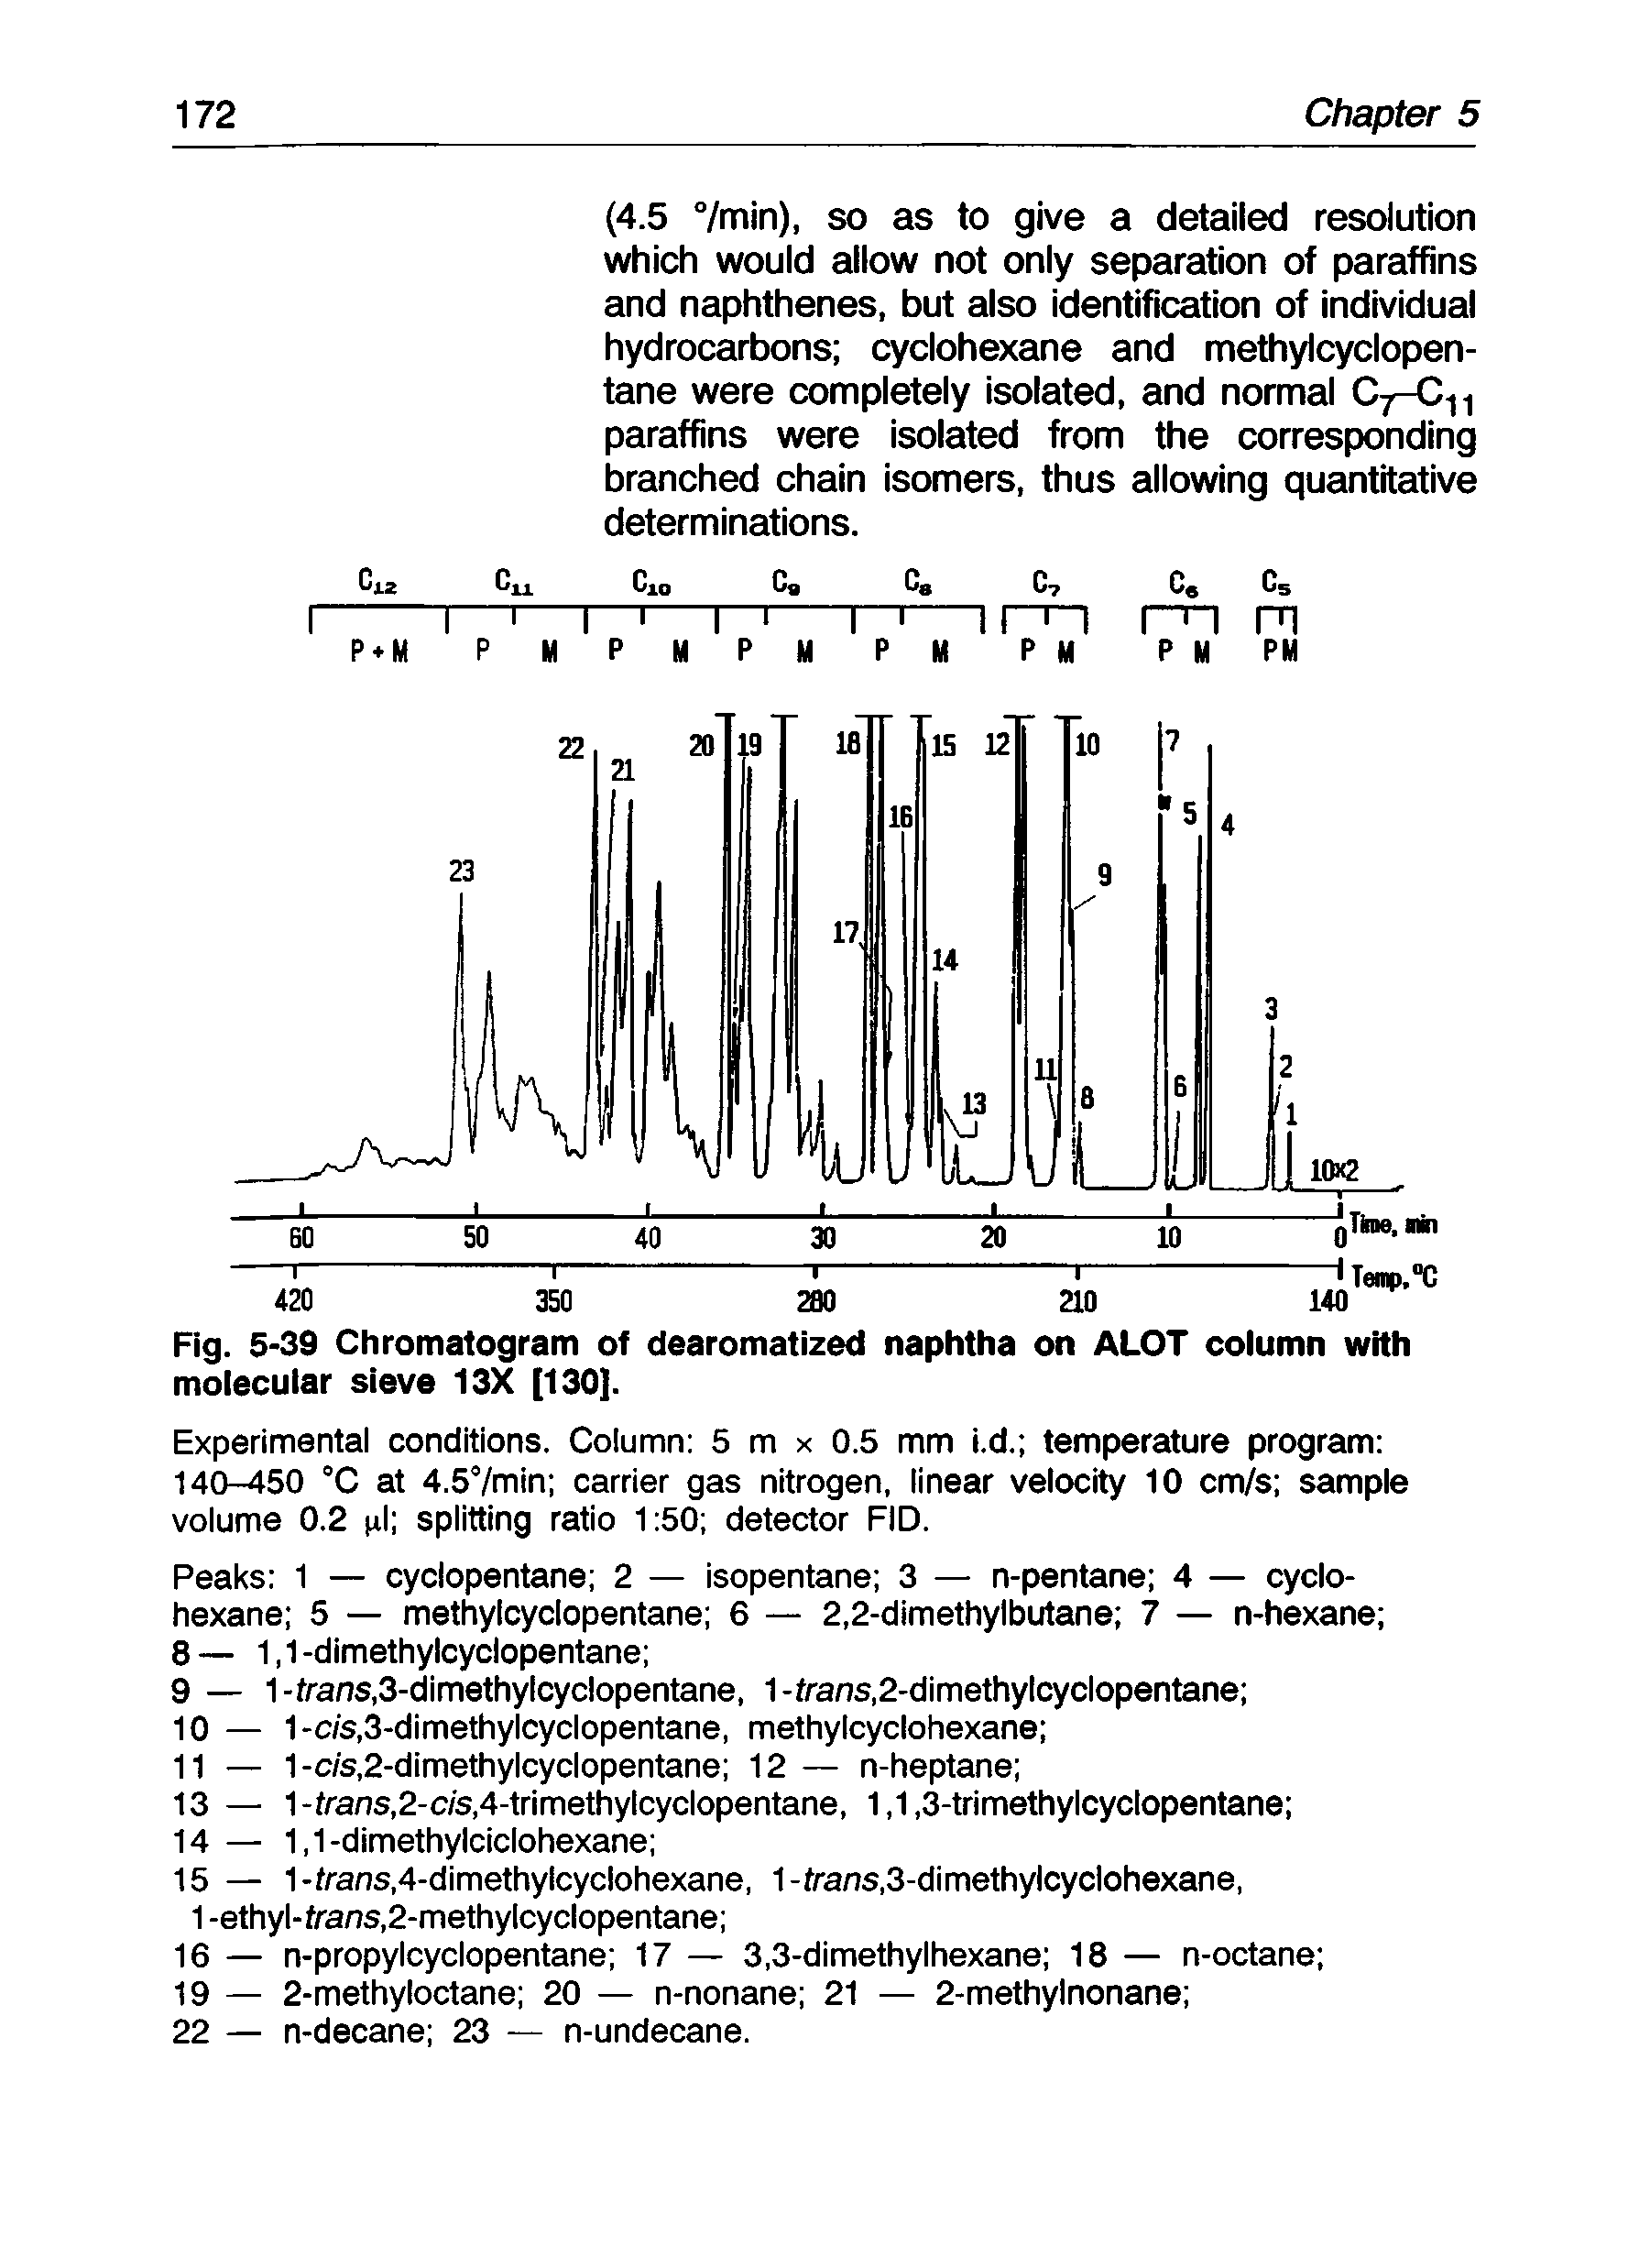 Fig. 5-39 Chromatogram of dearomatized naphtha on ALOT column with molecular sieve 13X [130].